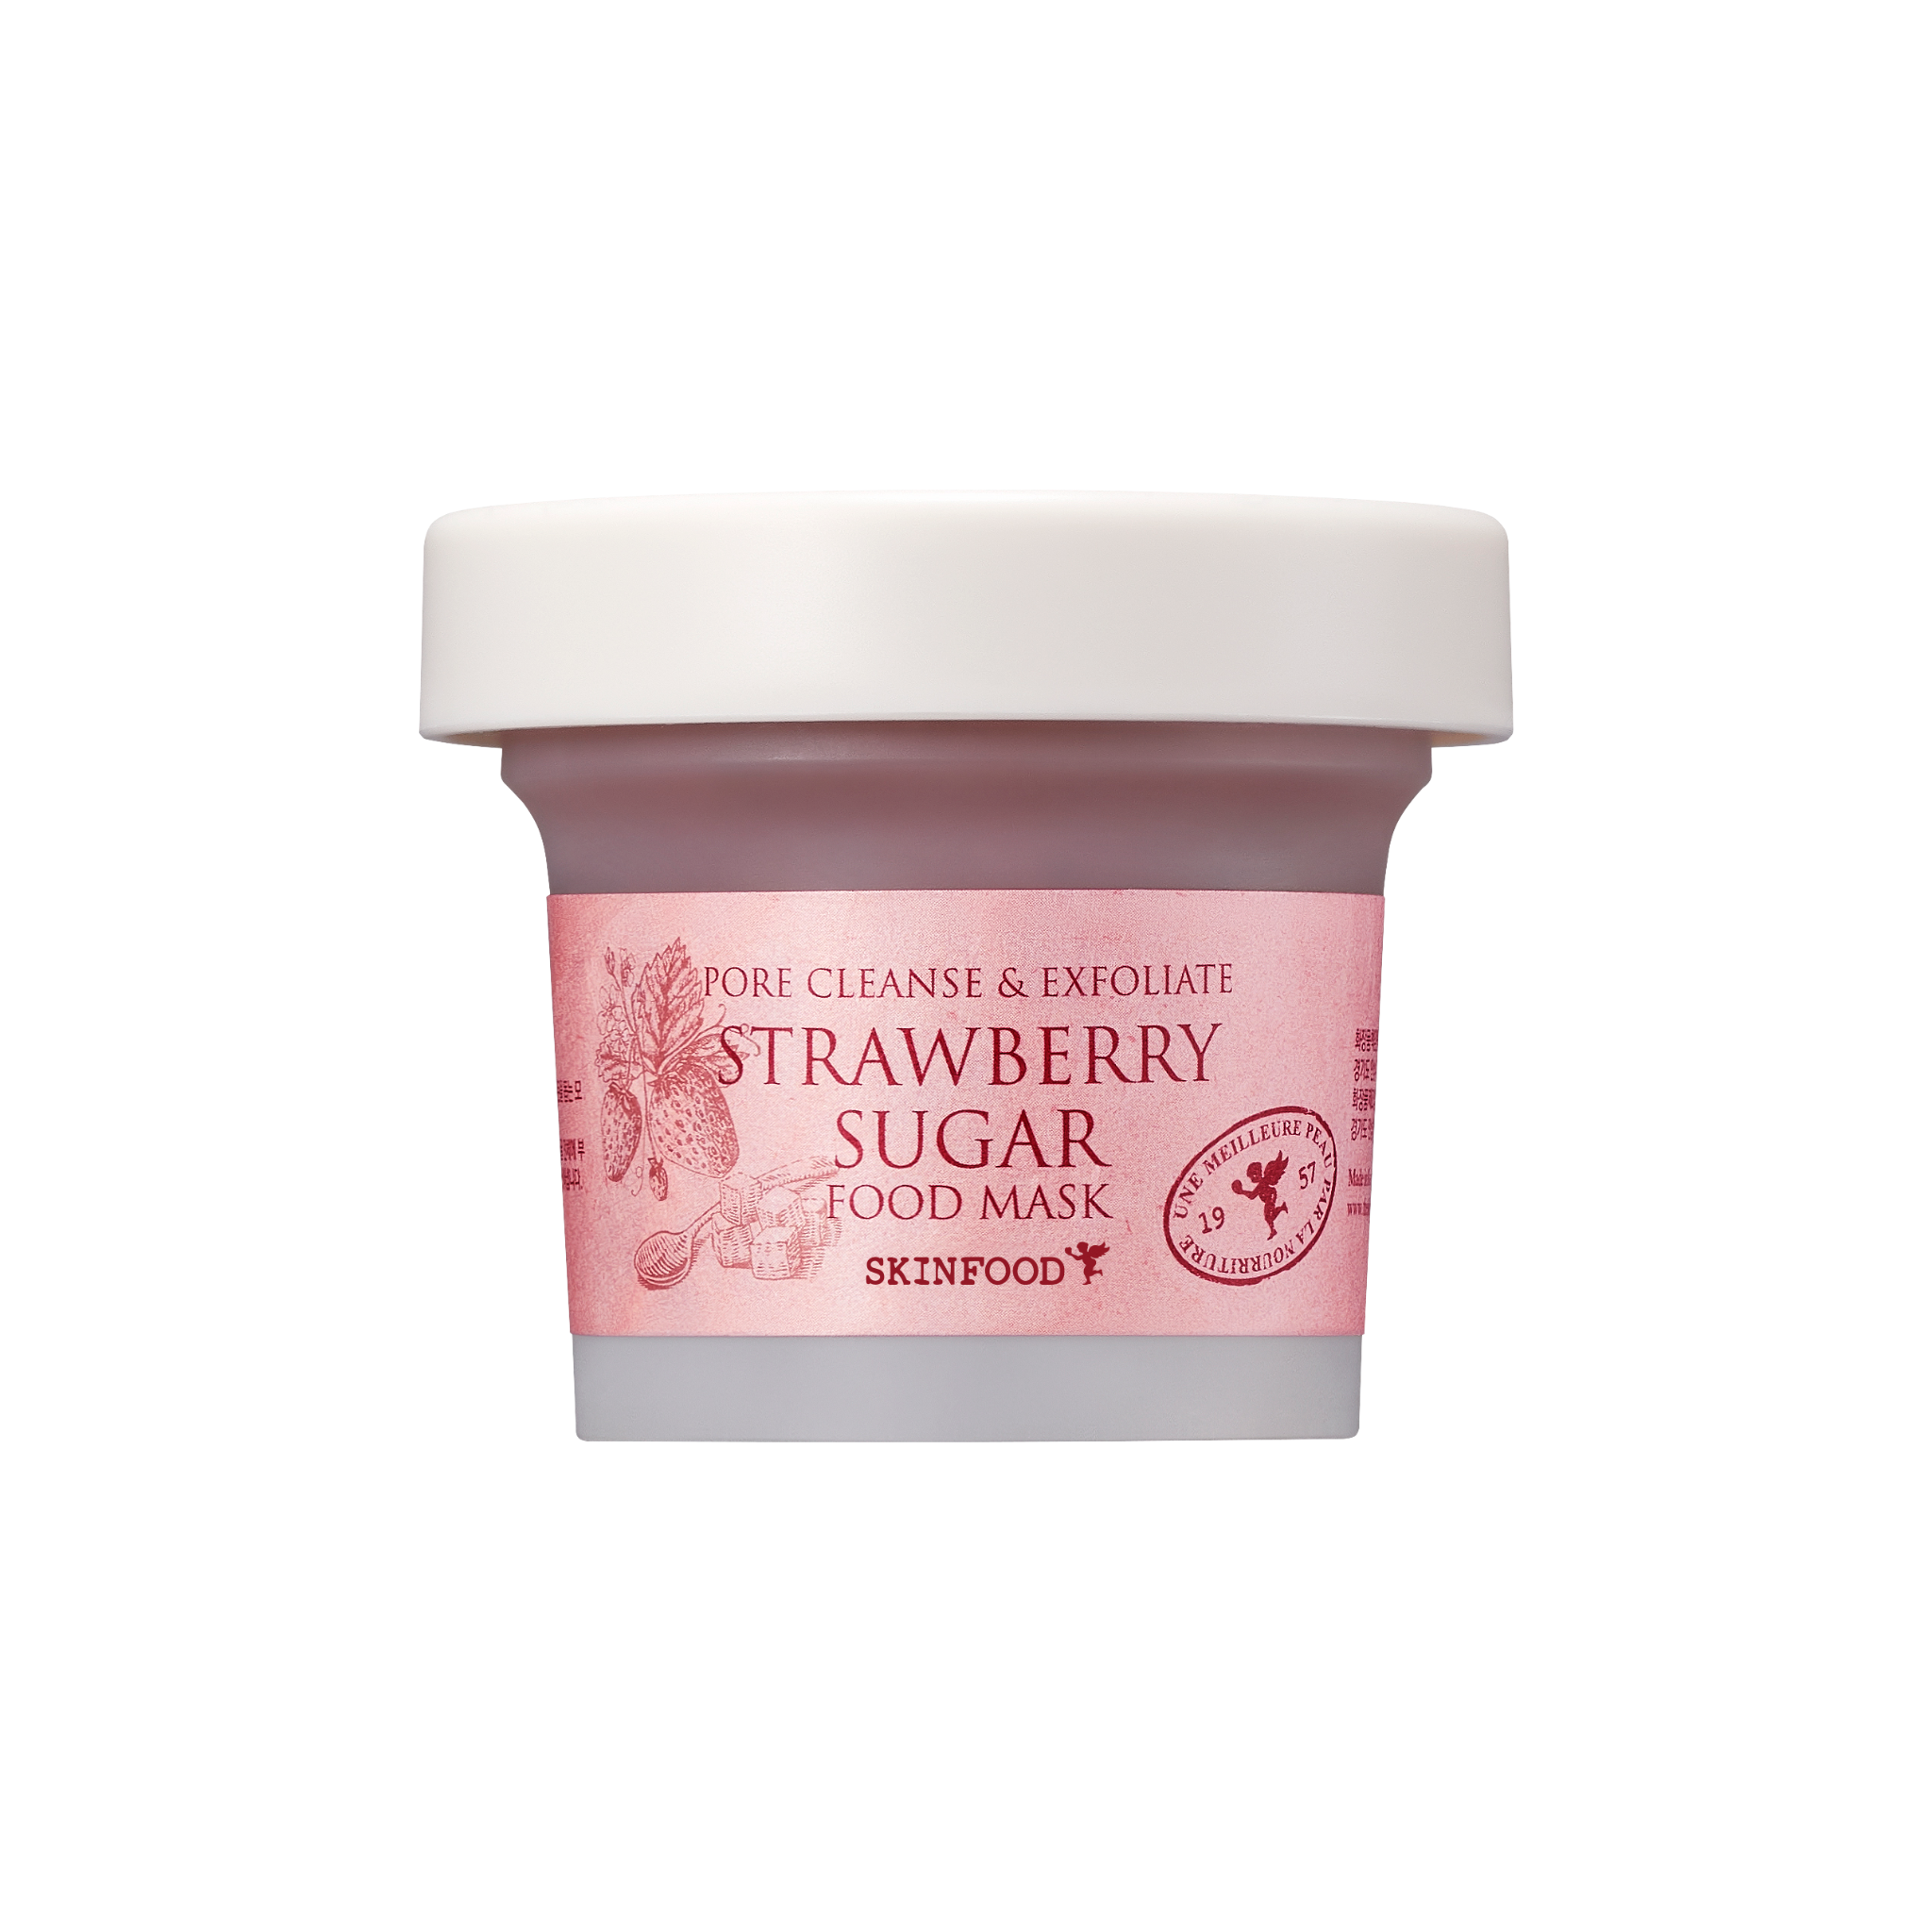 SKINFOOD Strawberry Sugar Food Mask (120g)